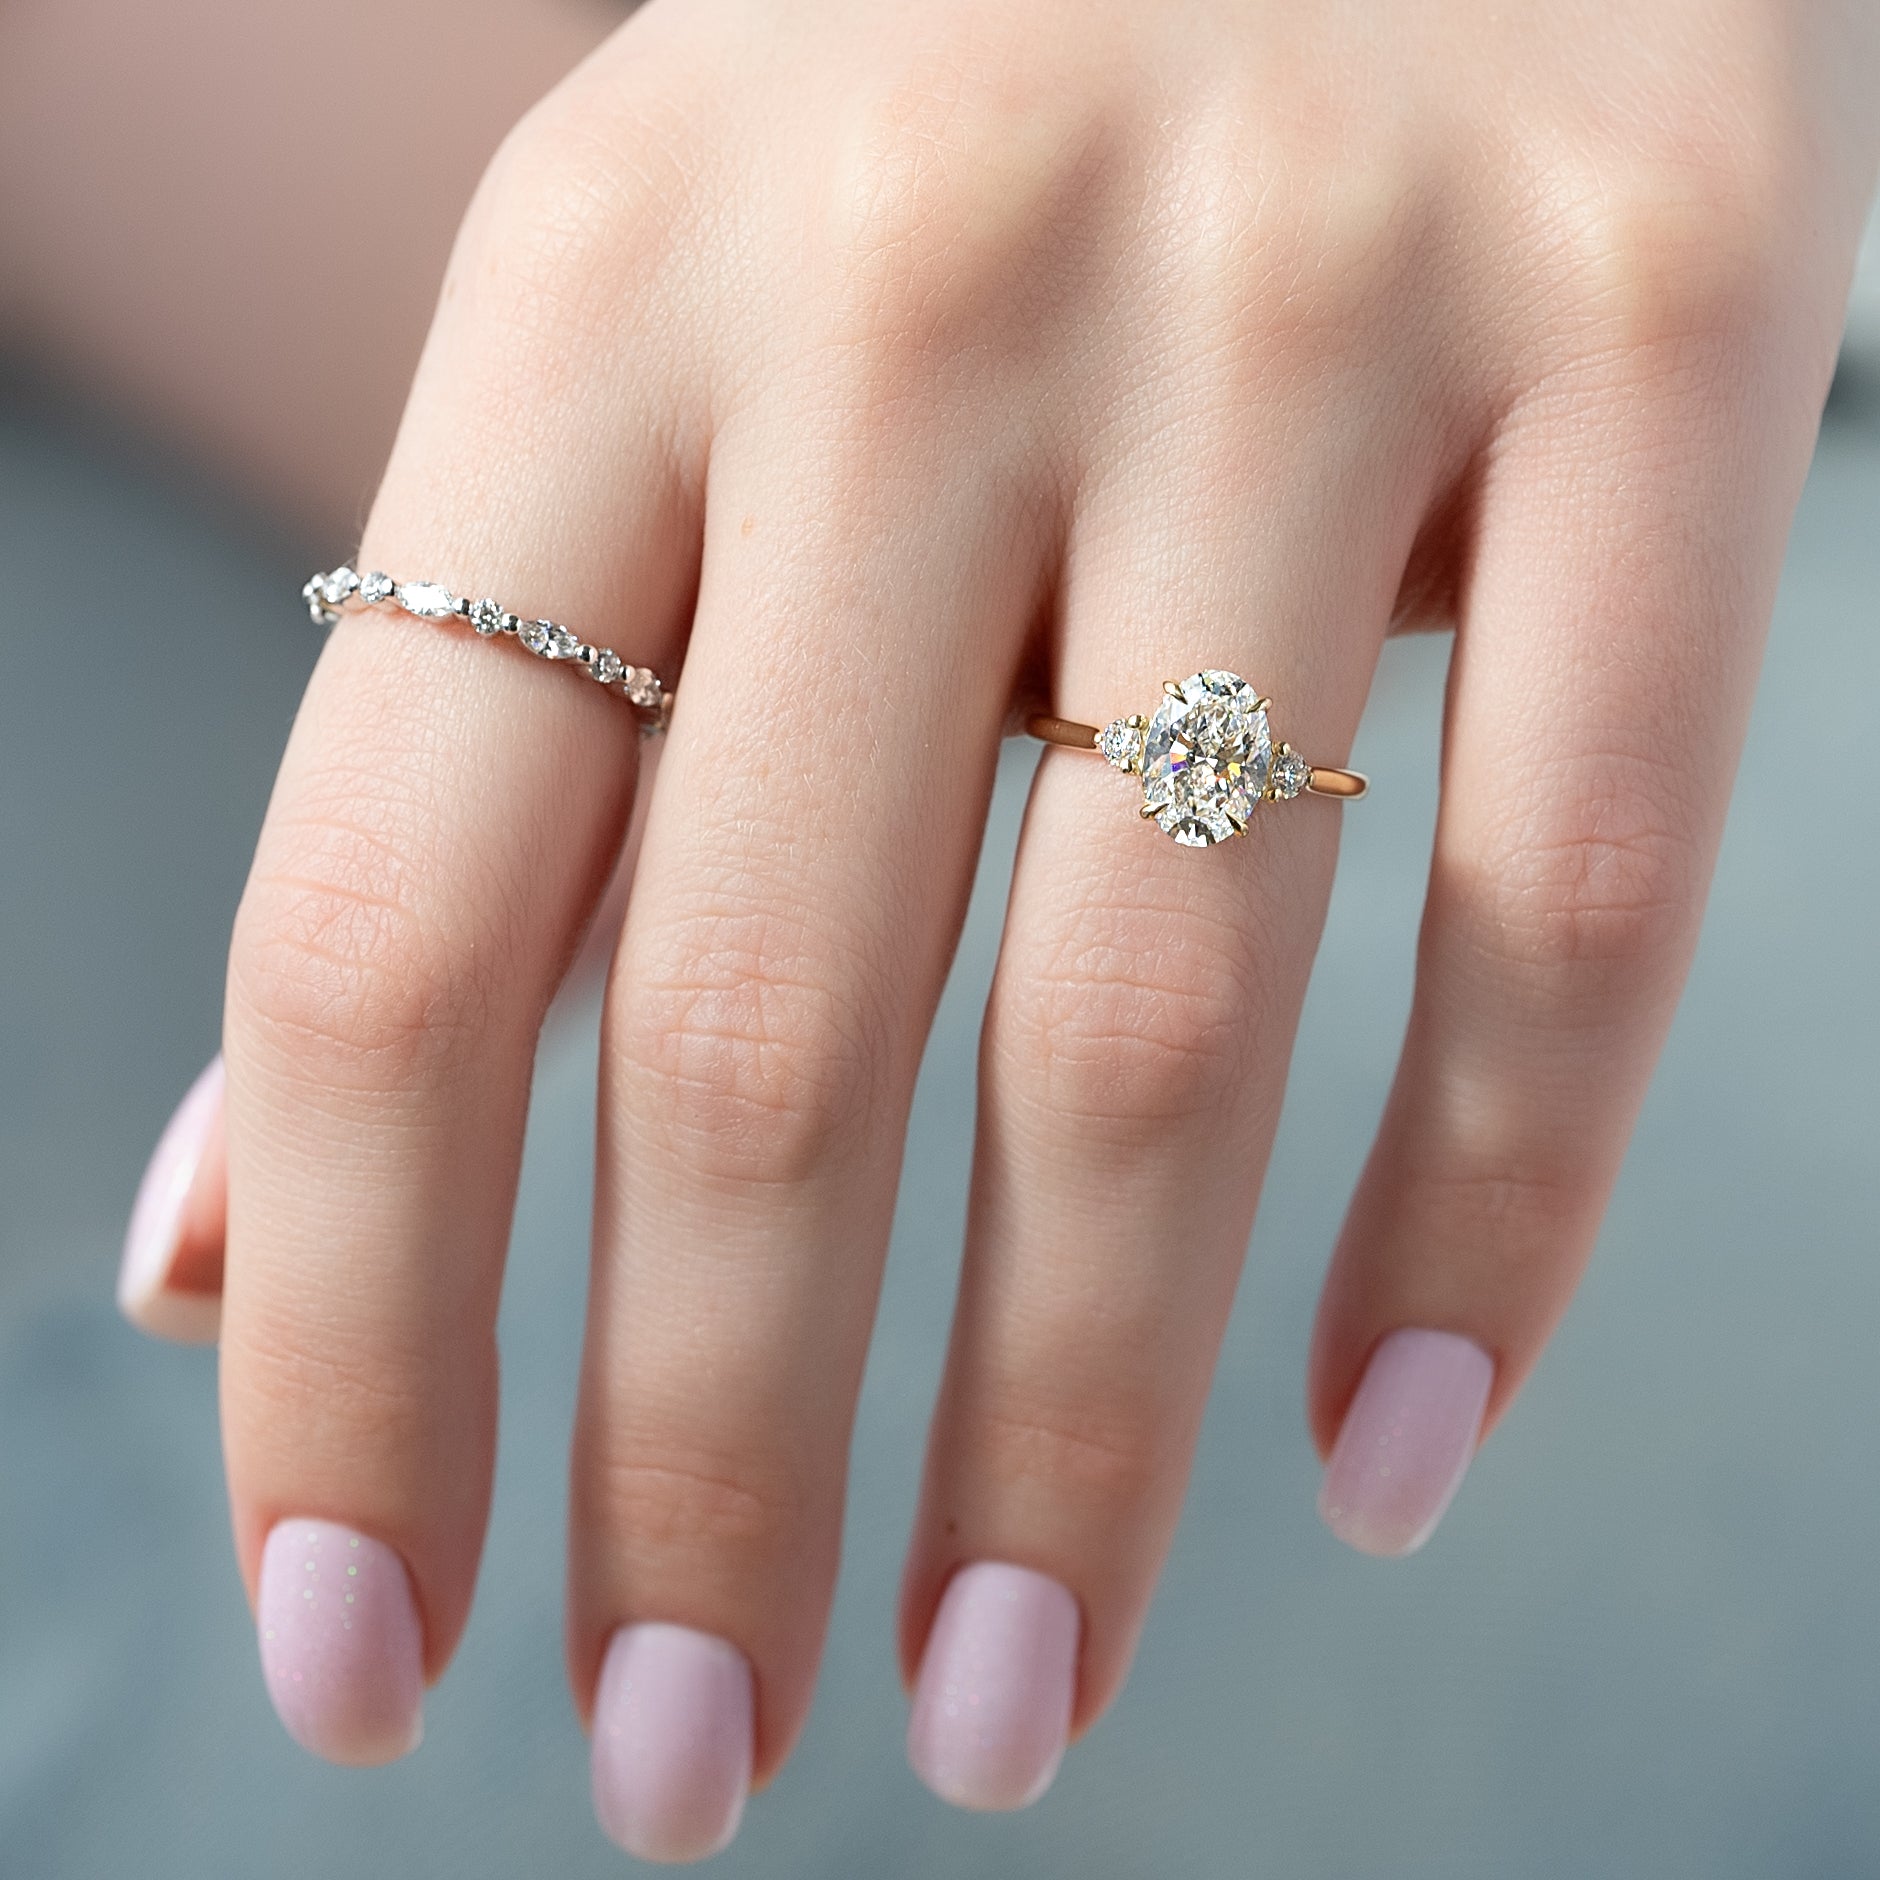 2 Carat Solitaire Diamond Rings - Choosing the Perfect Design